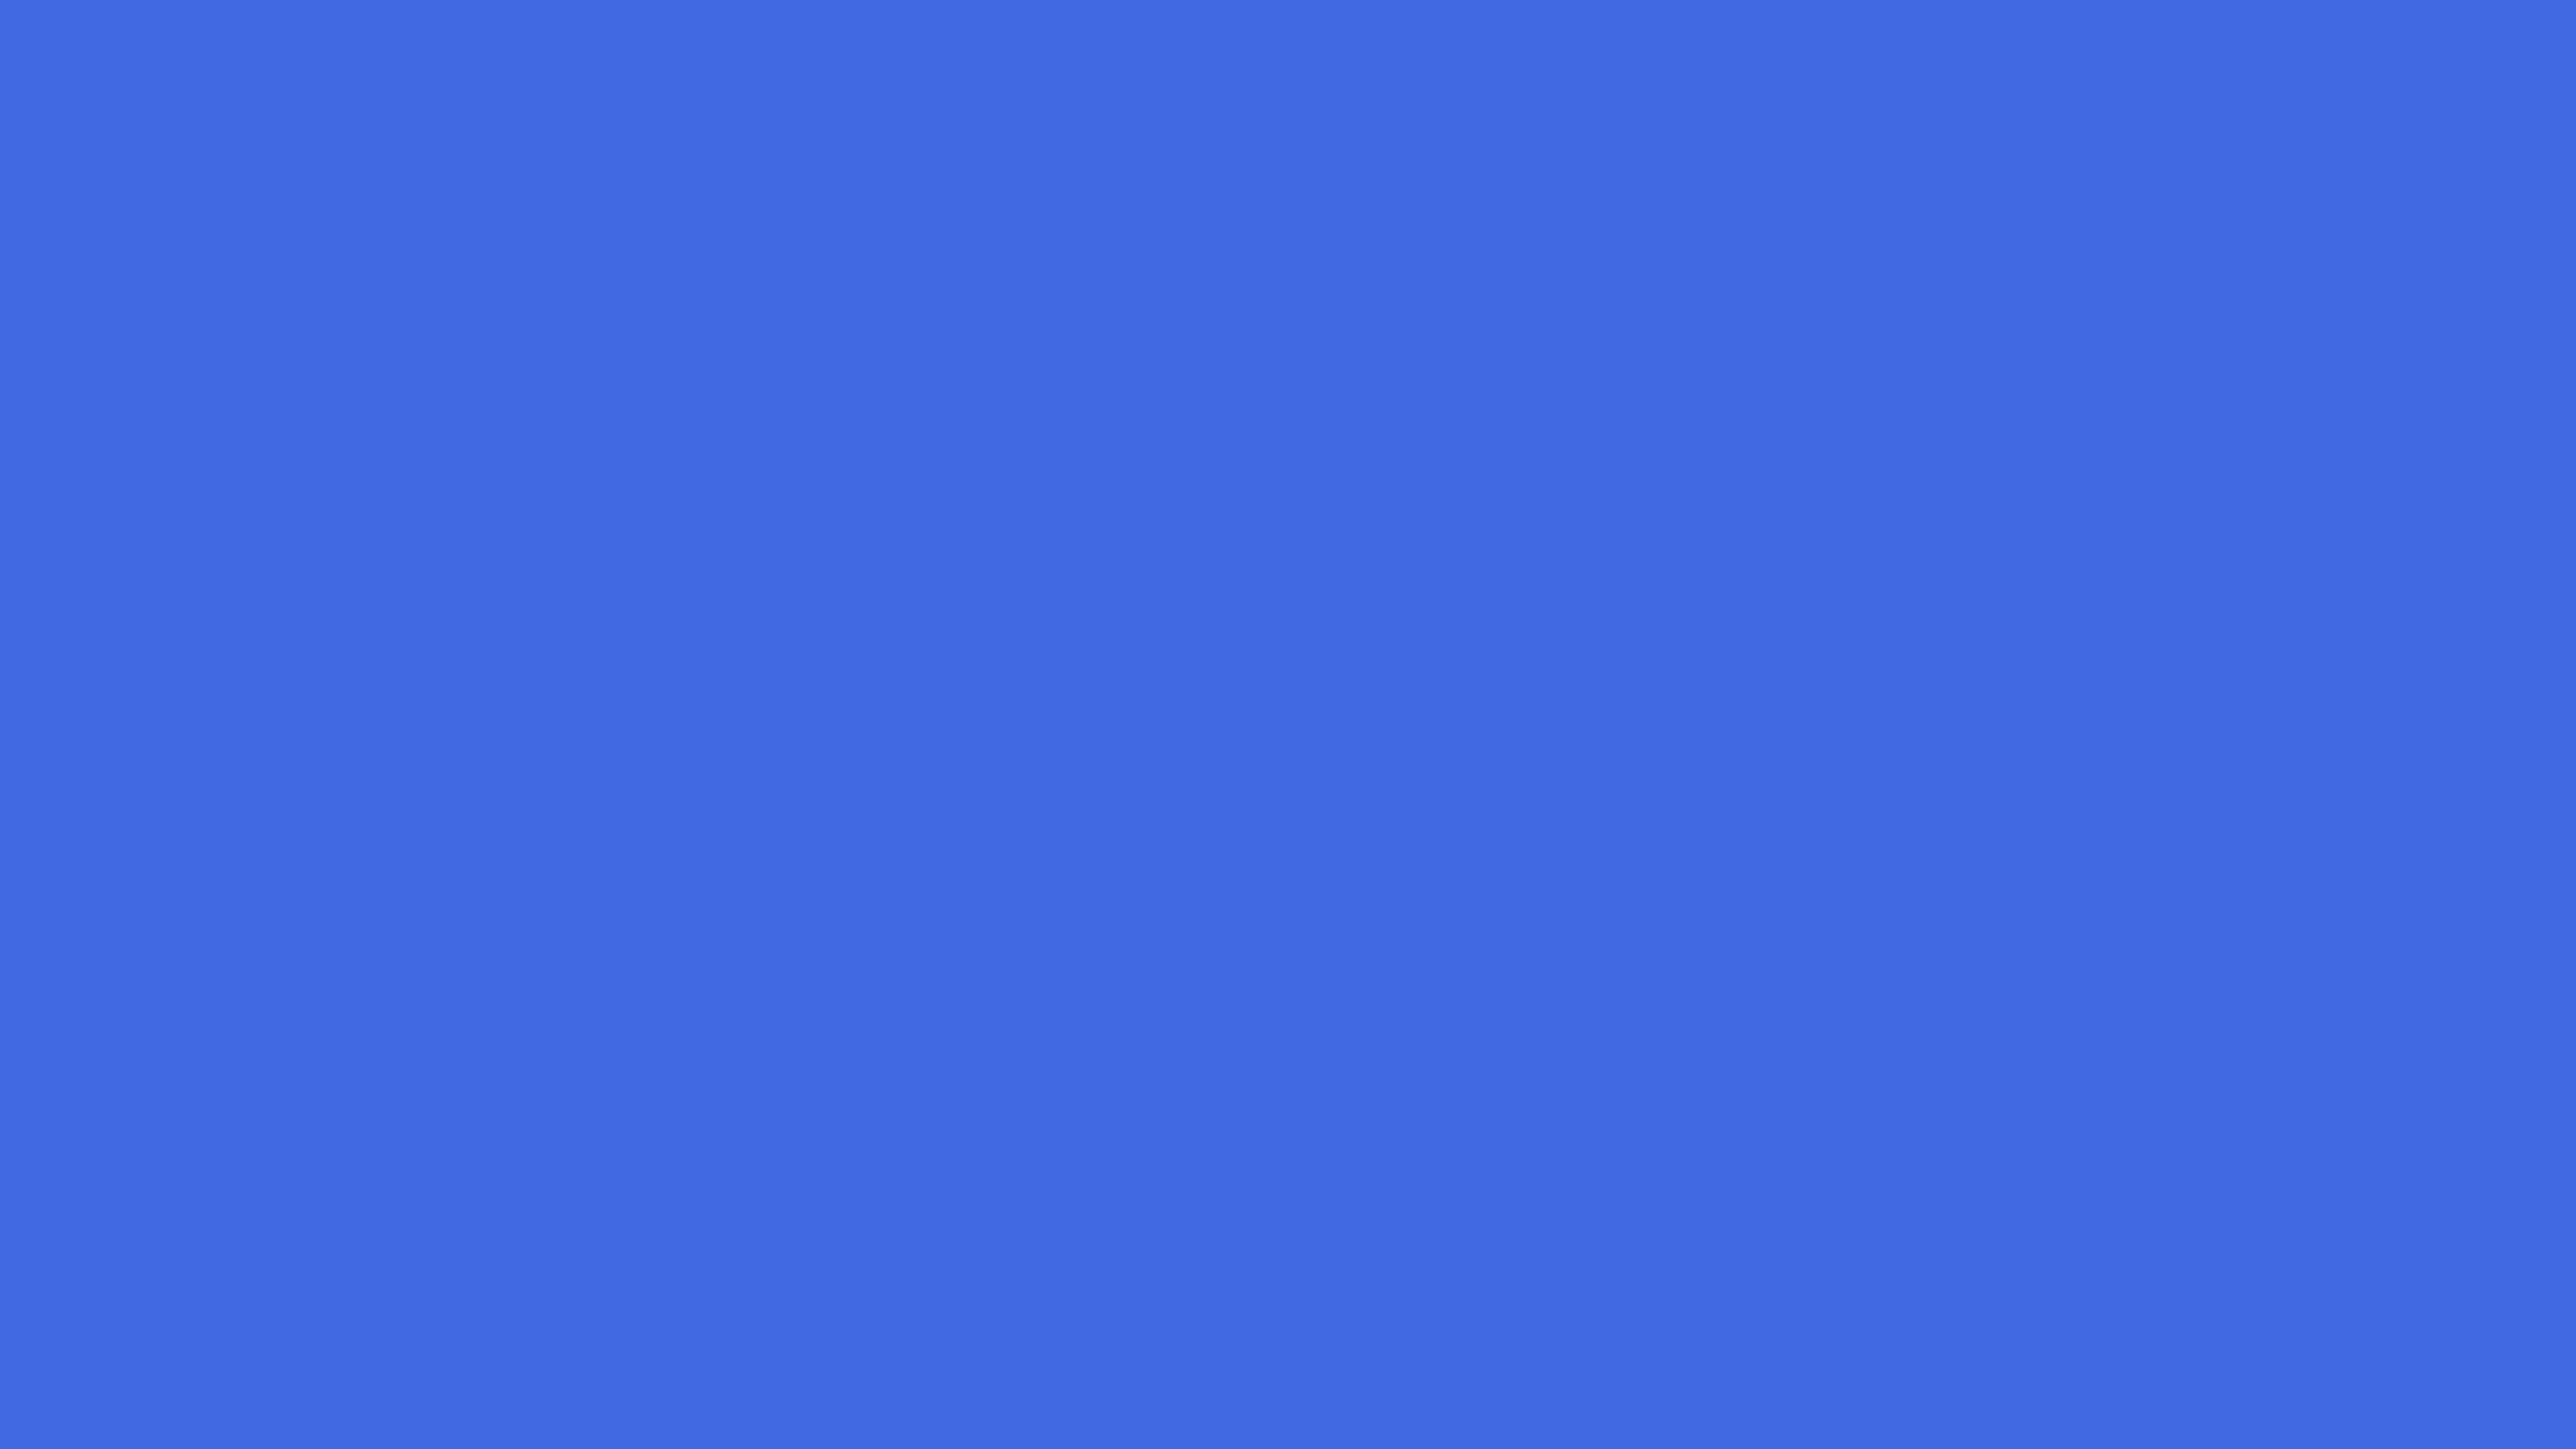 4096x2304 Royal Blue Web Solid Color Background